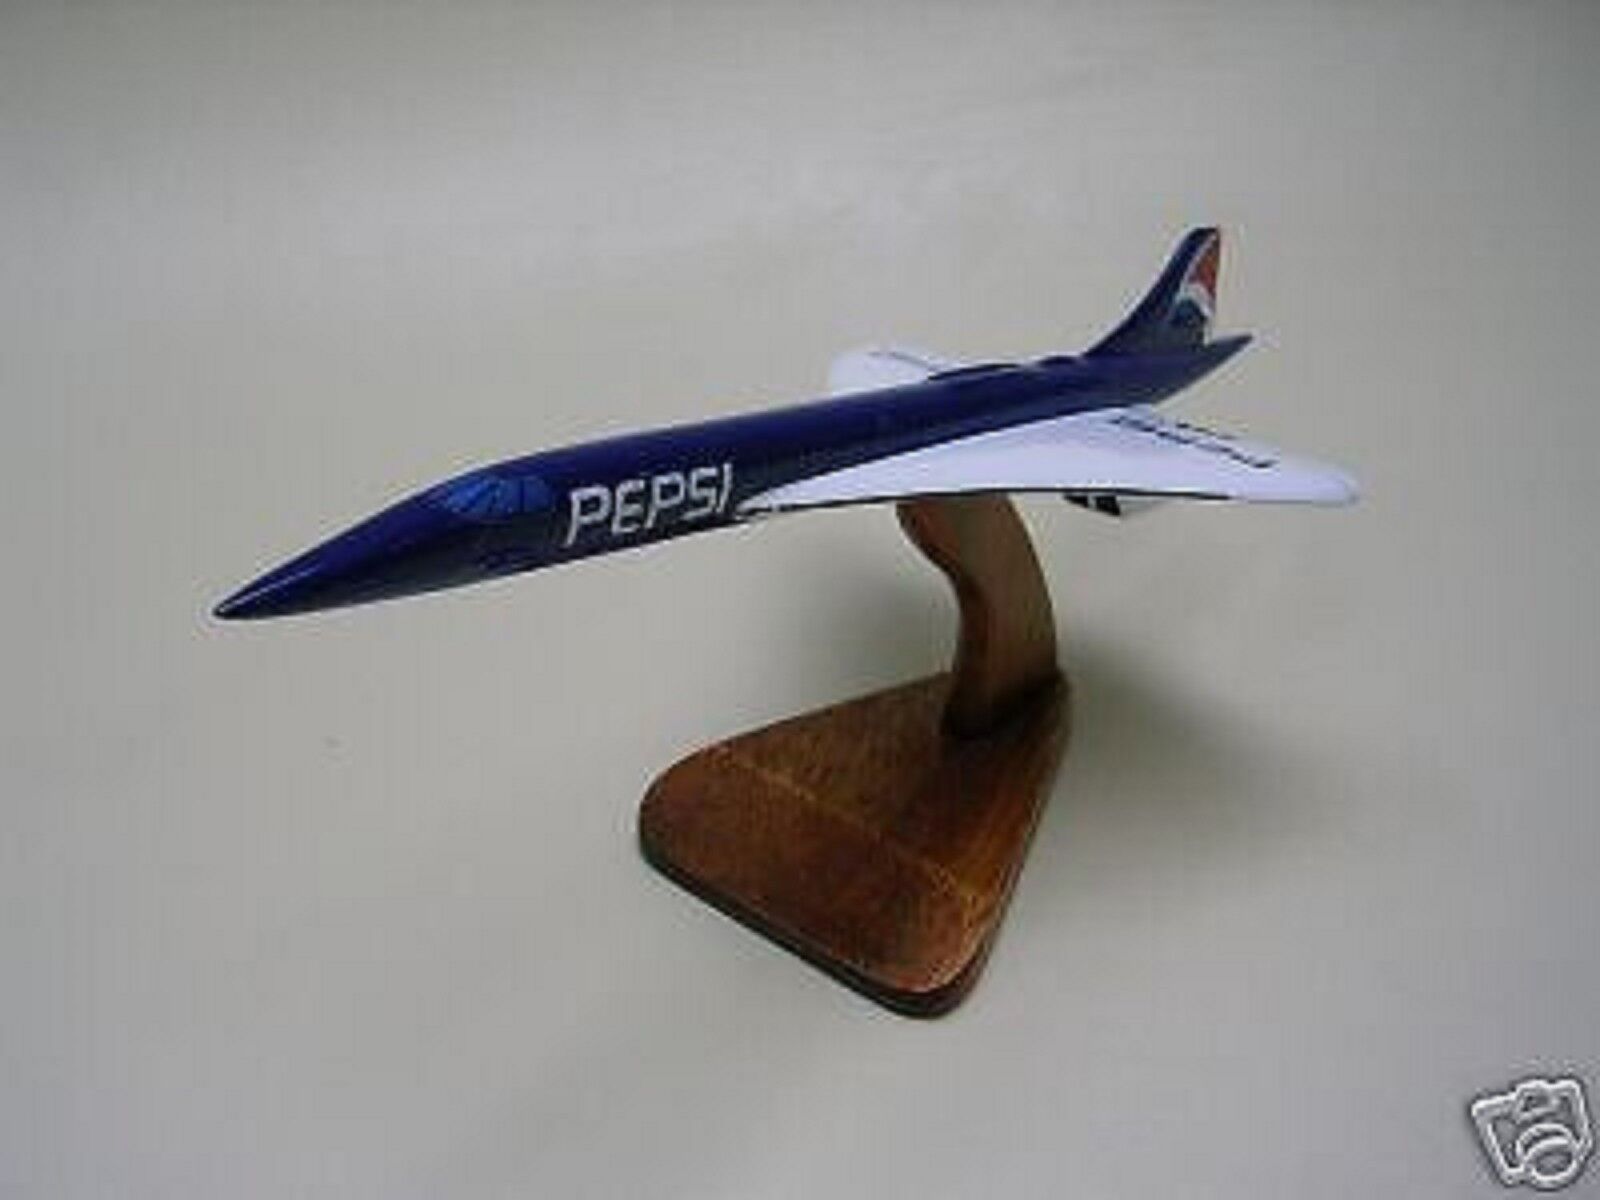 Concorde Pepsi SST Airplane Desktop Wood Model Small New